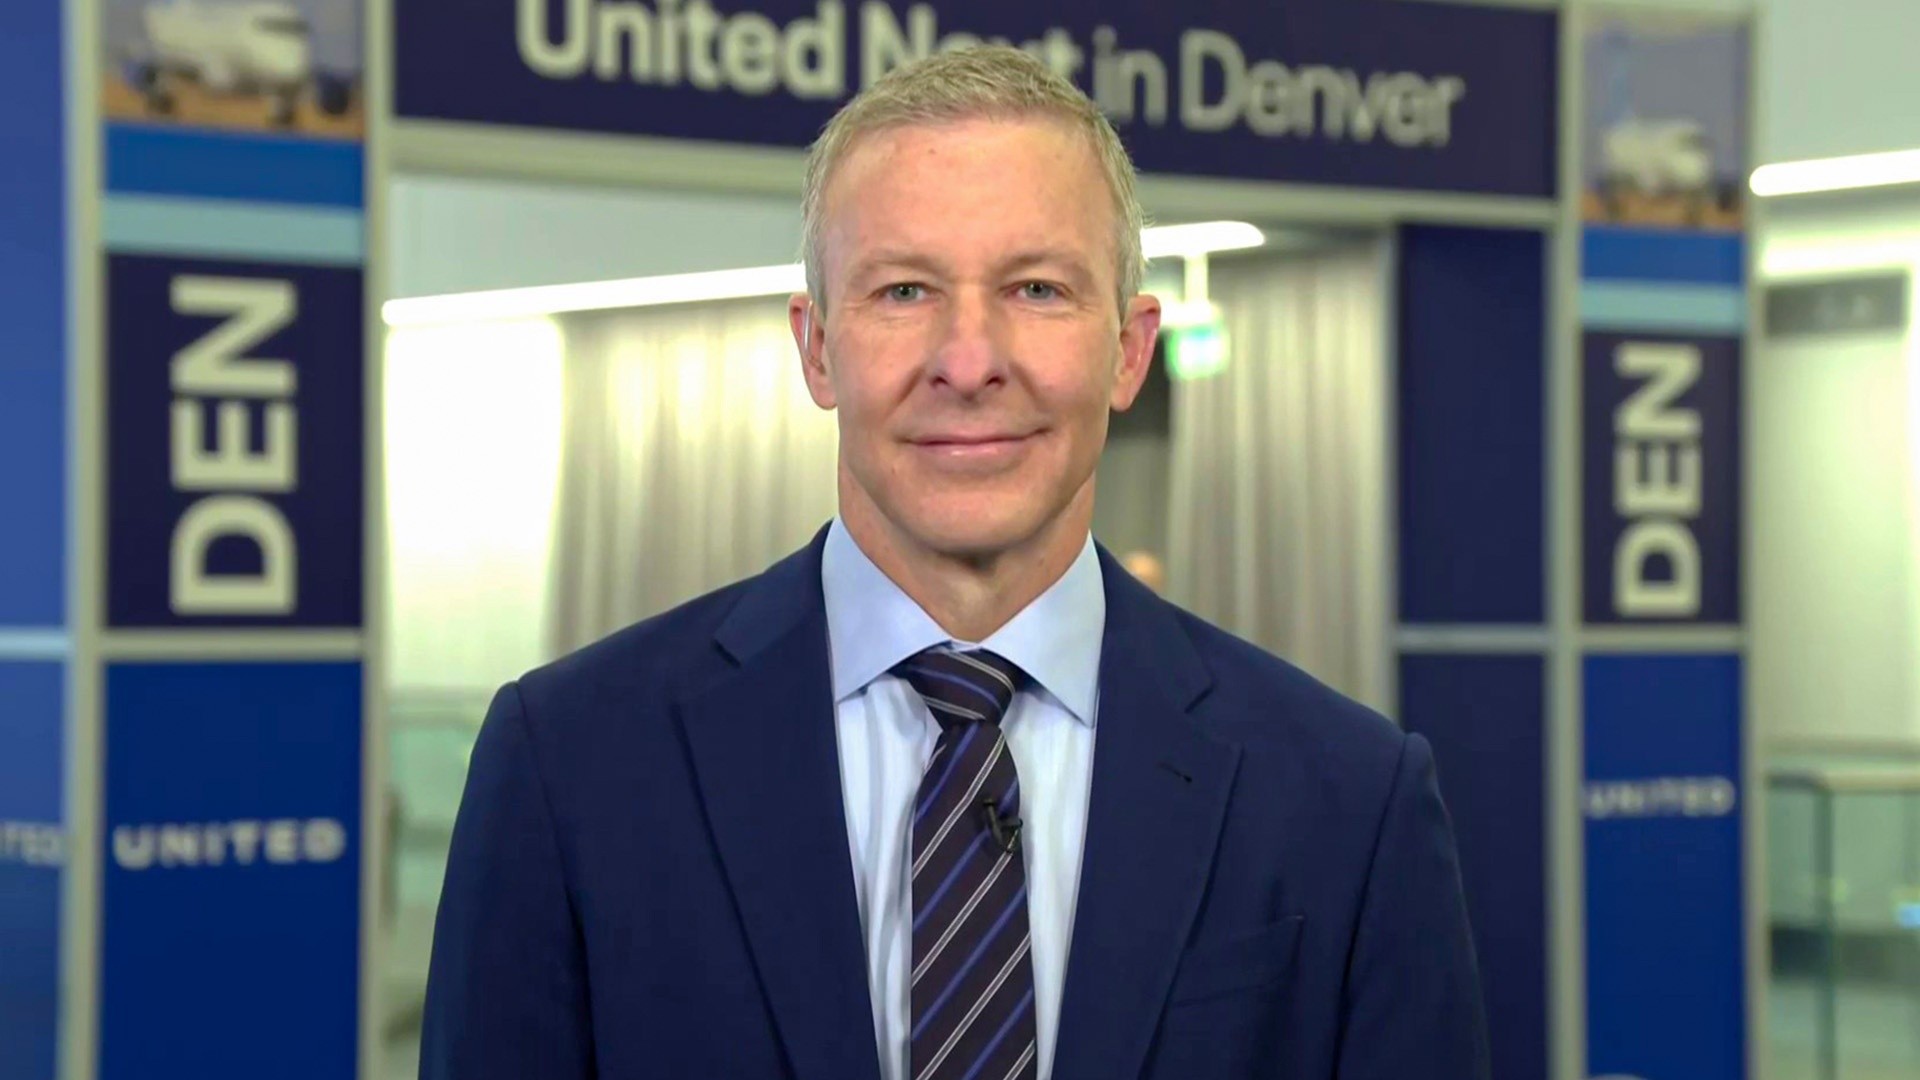 United Airlines CEO talks airfares, delays, passenger compensation